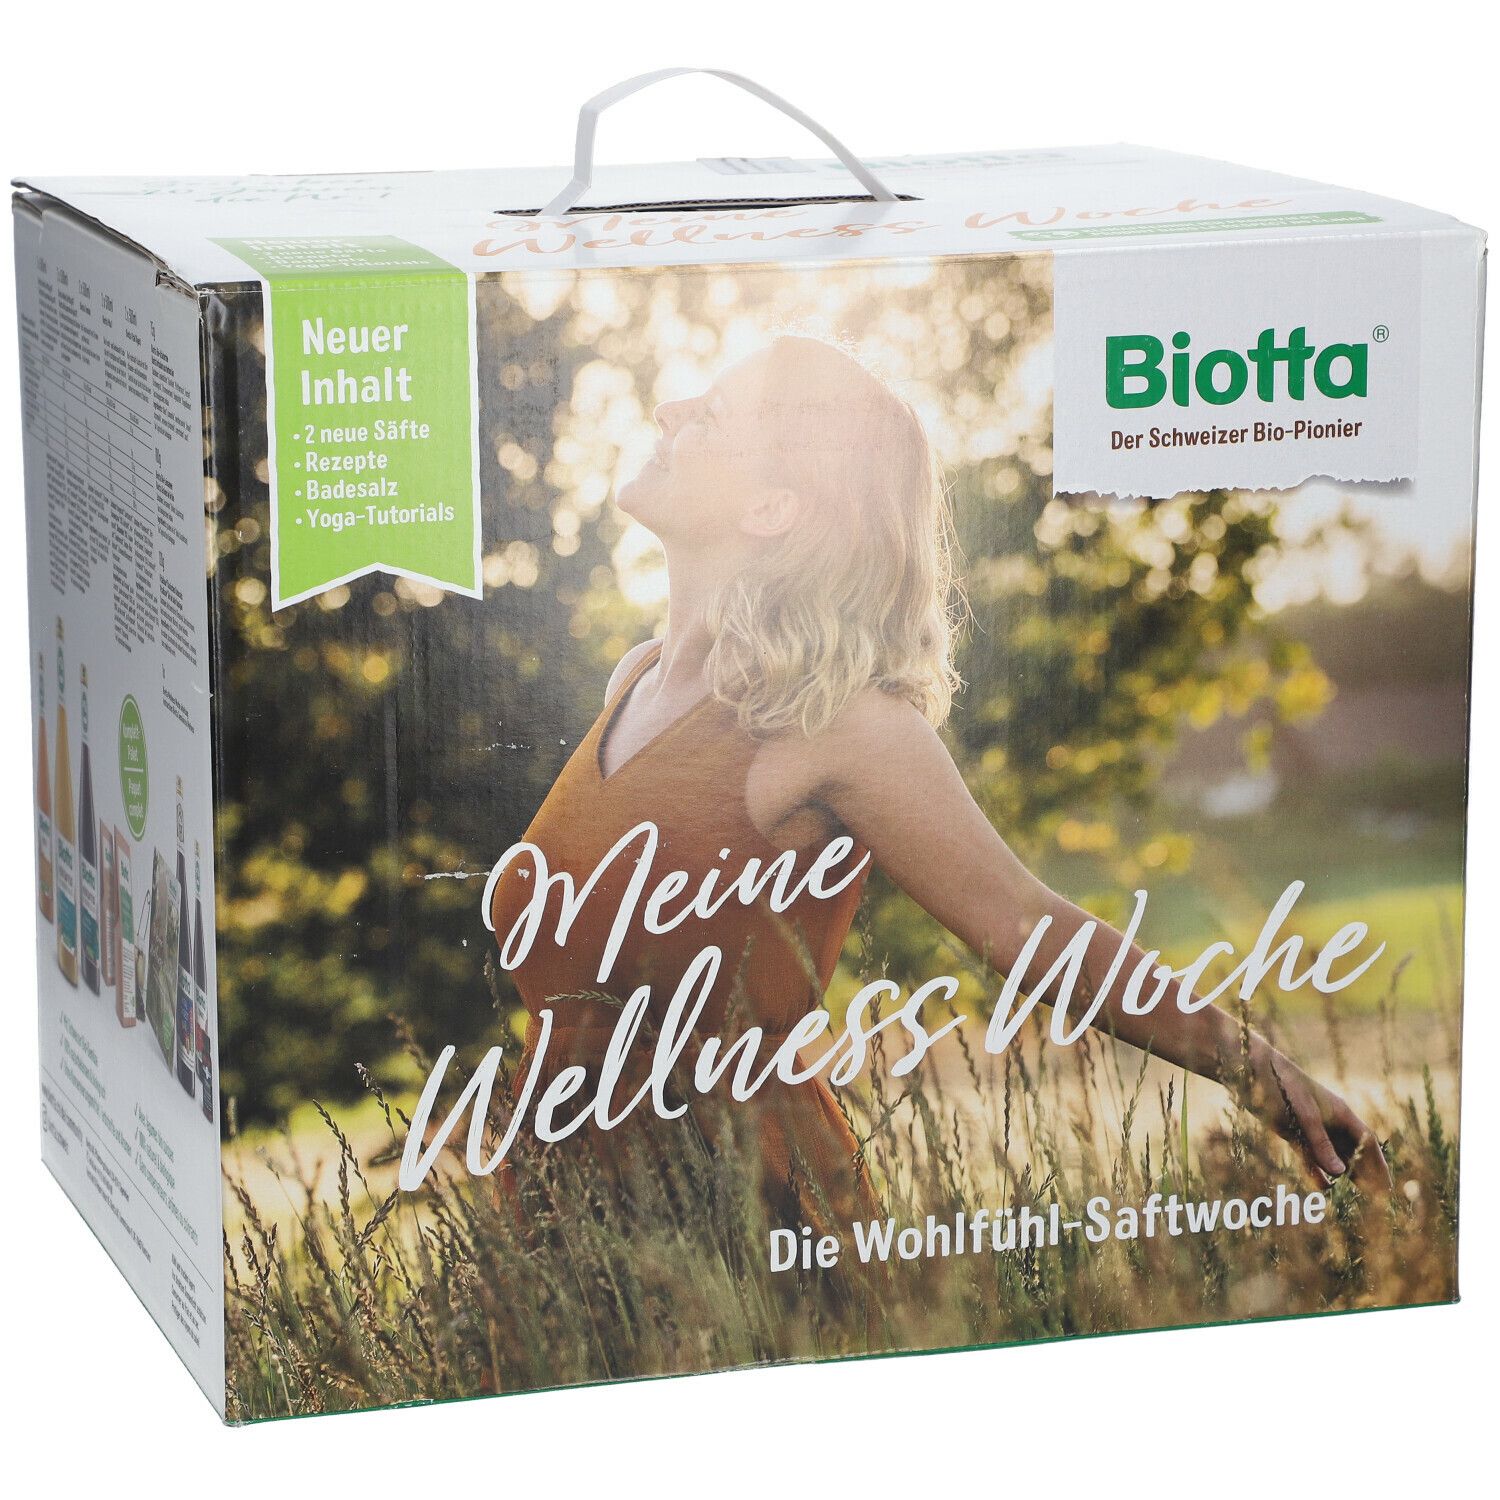 Biotta® Wellness Woche